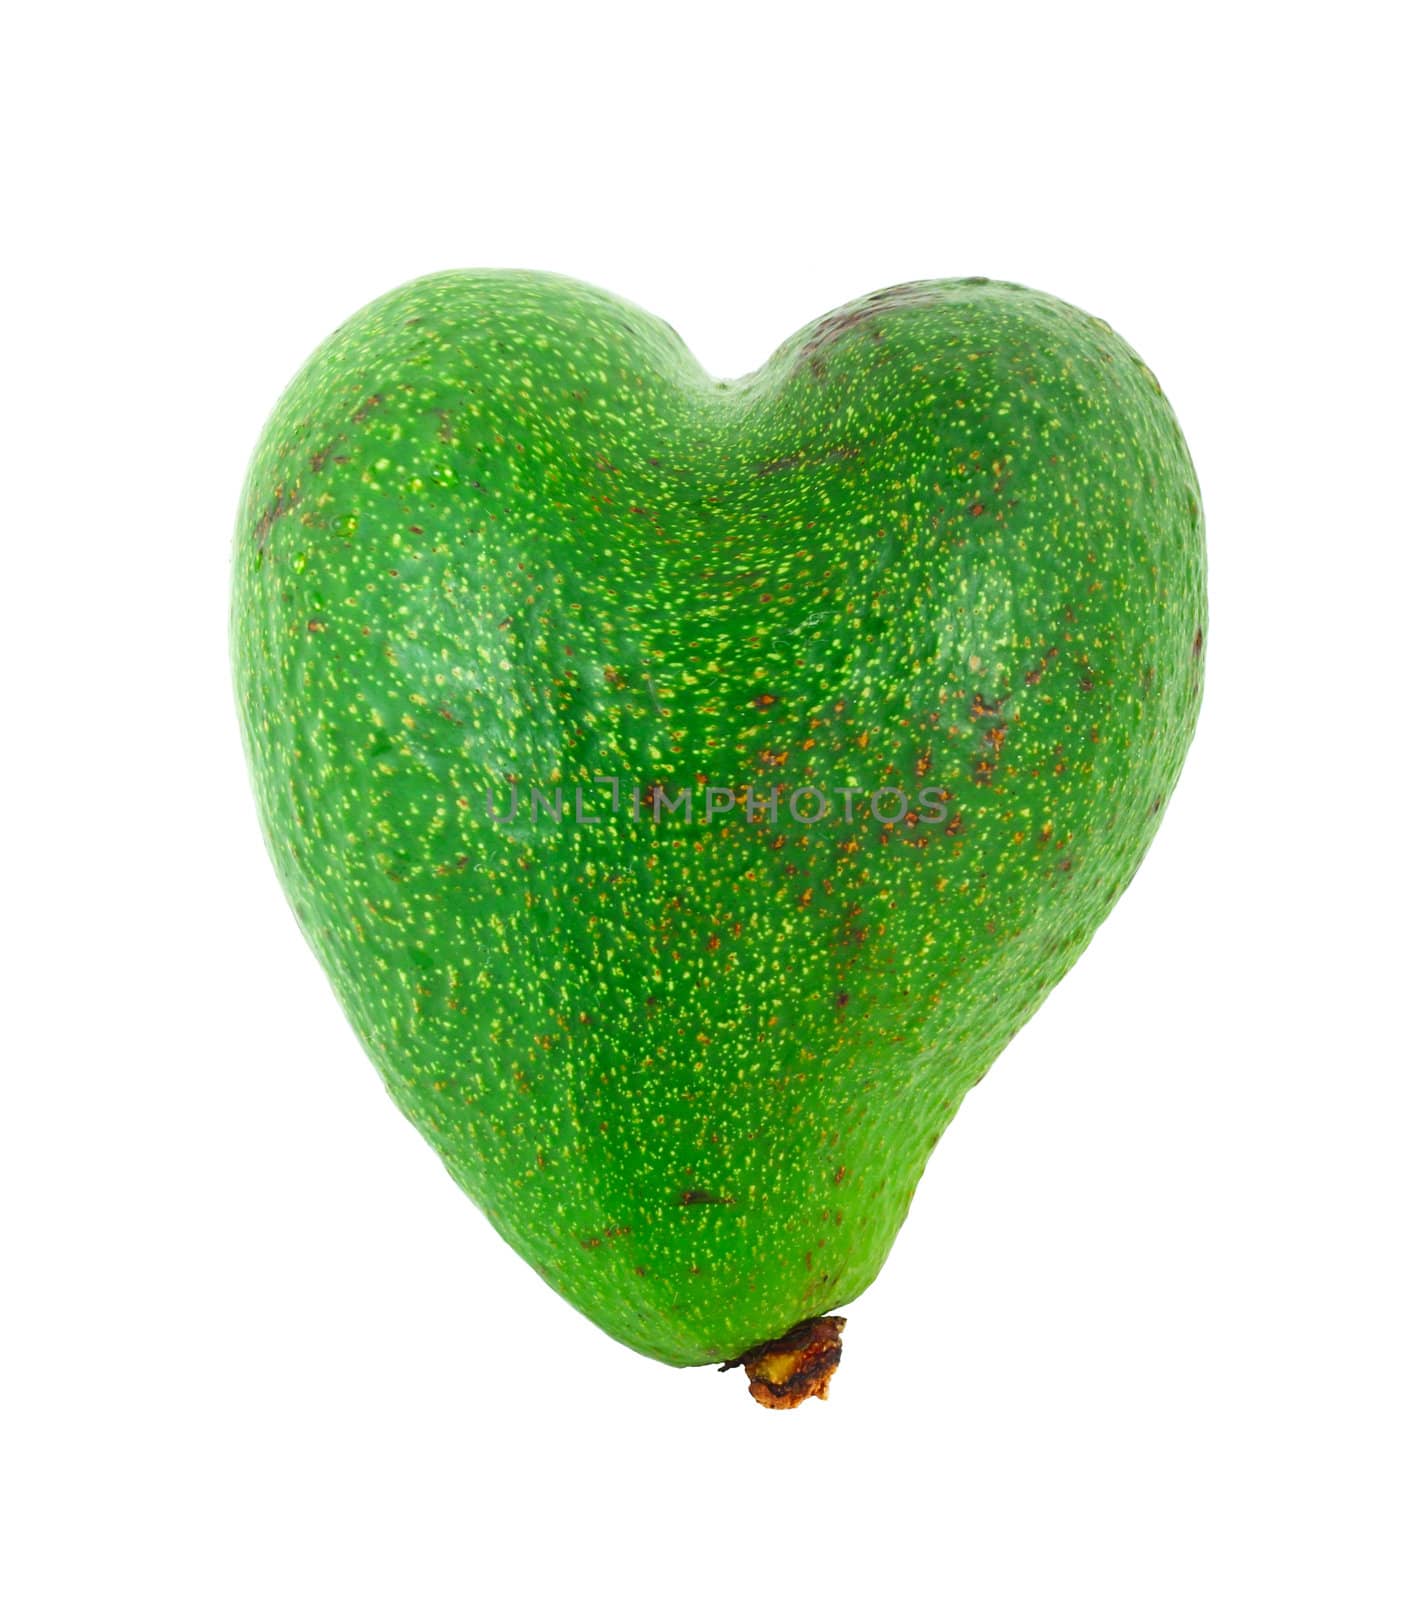 Avocado shaped like heart healthcare concept